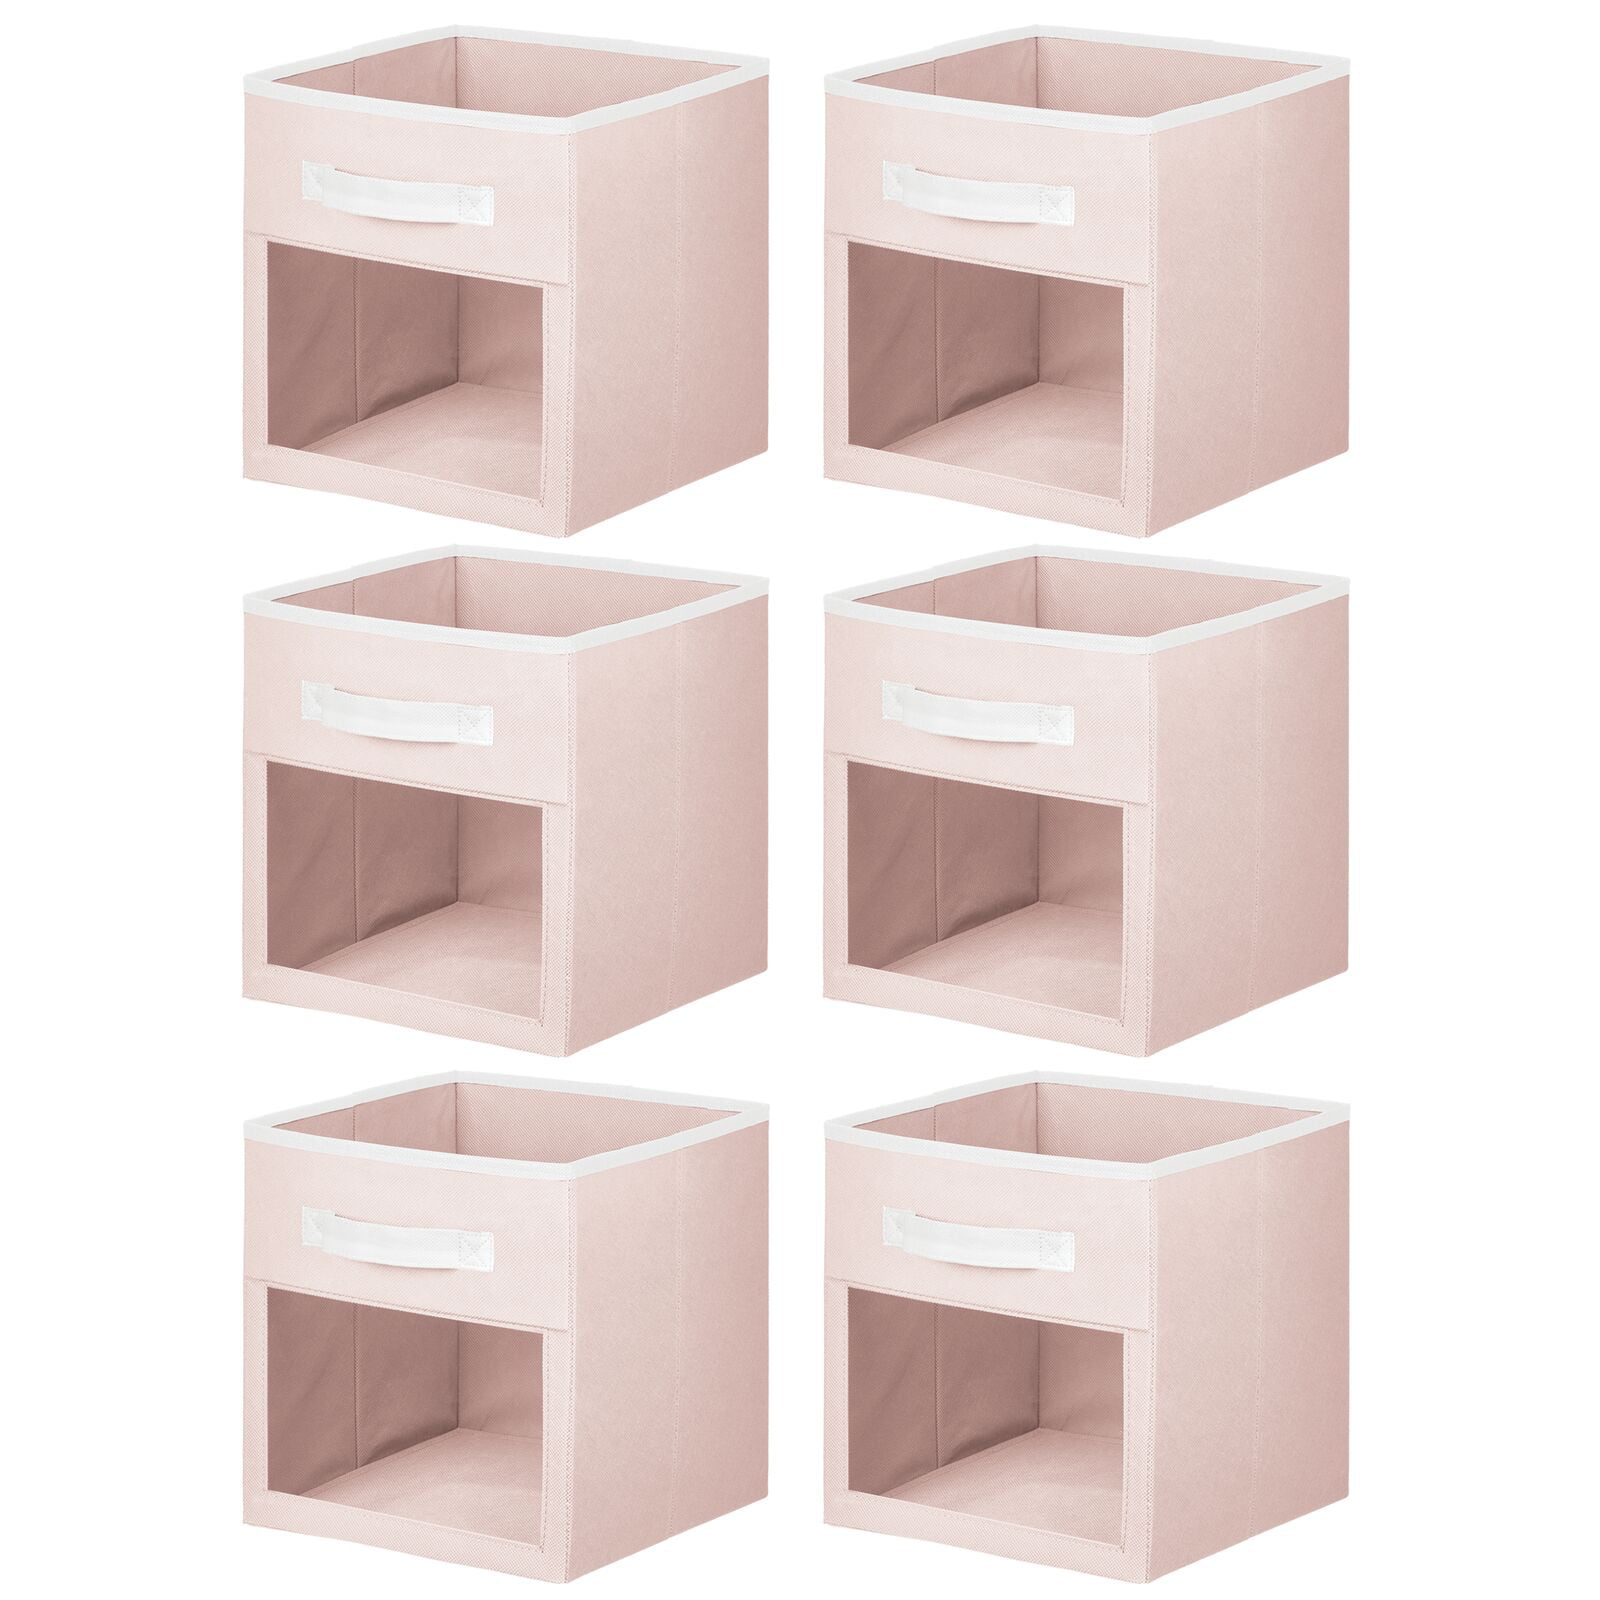 Handle Storage for Baby Child/Kids Room Toy Room Shelf 12.75 High 2 Pack mDesign Soft Fabric Closet Storage Organizer Cube Bin Box Nursery Light Pink/White Polka Dots Furniture Units